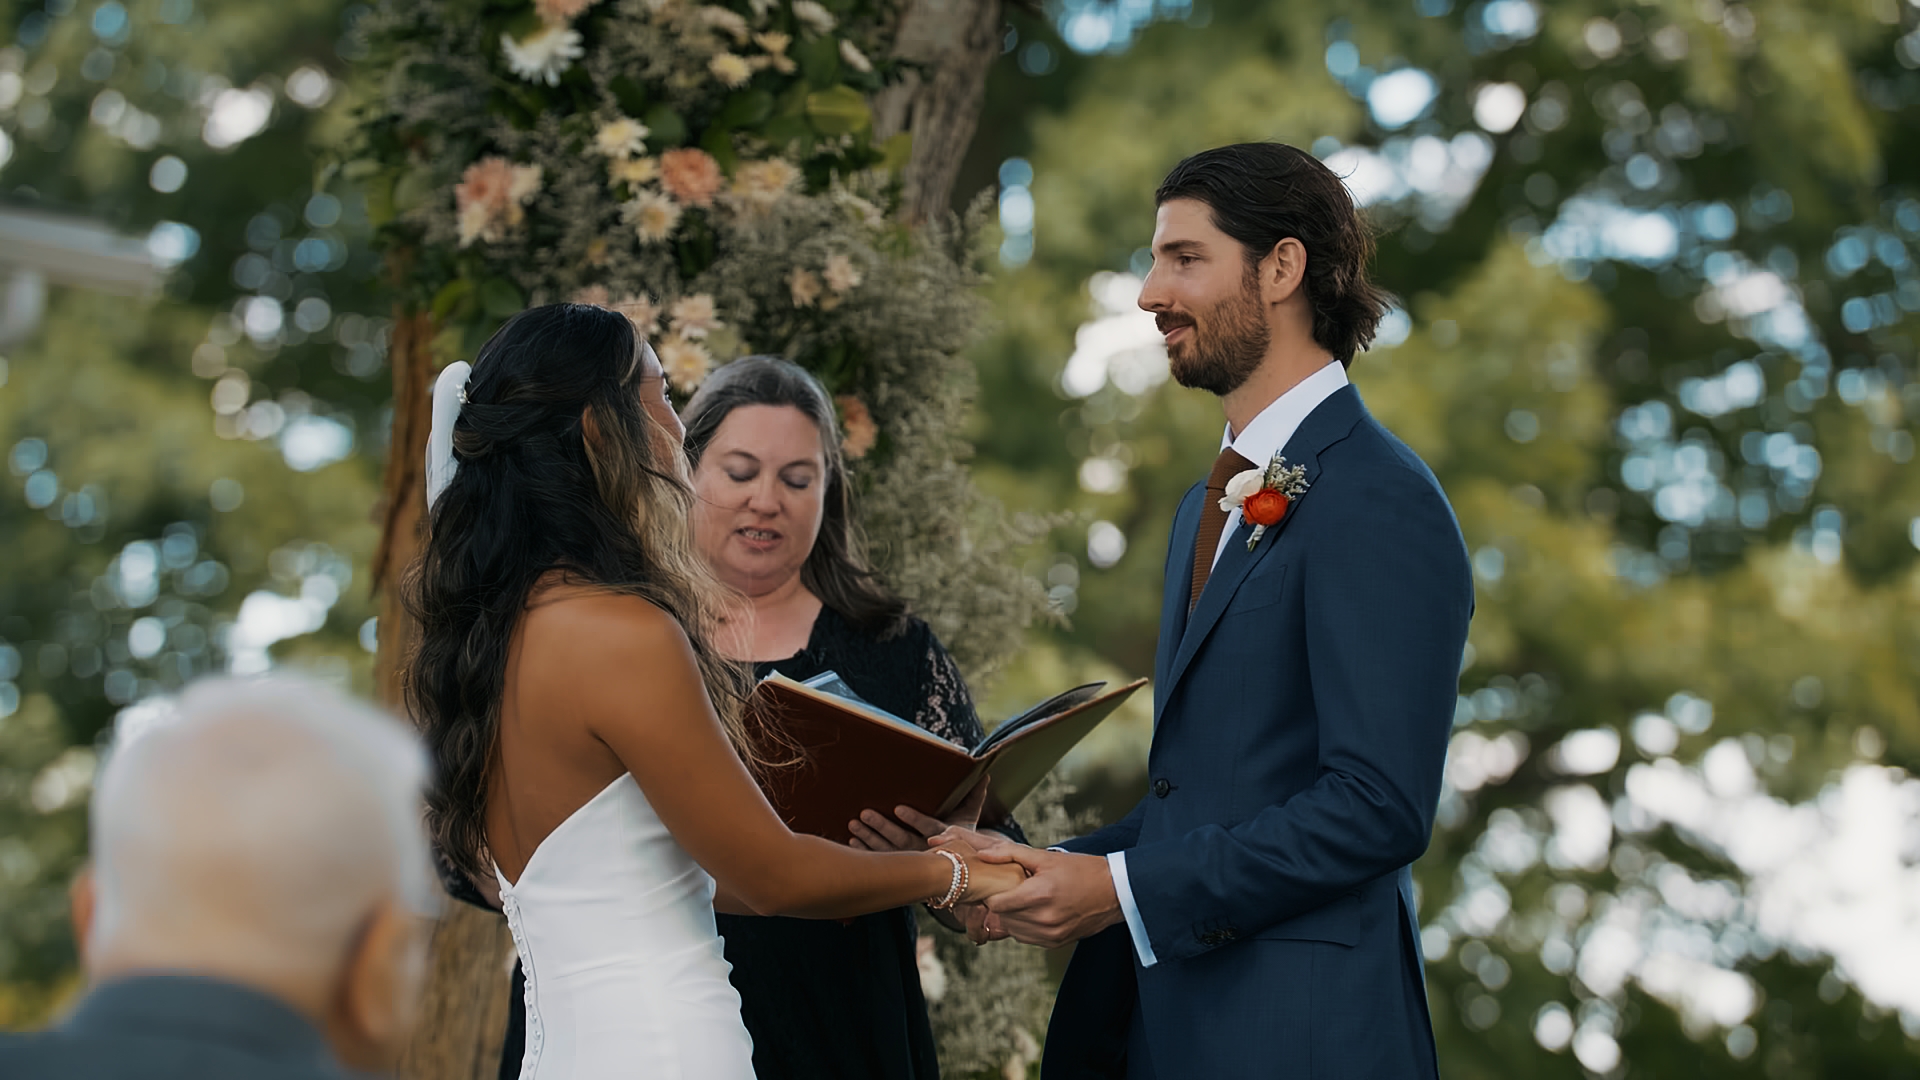 Ceremony at a Cornman Farms Wedding